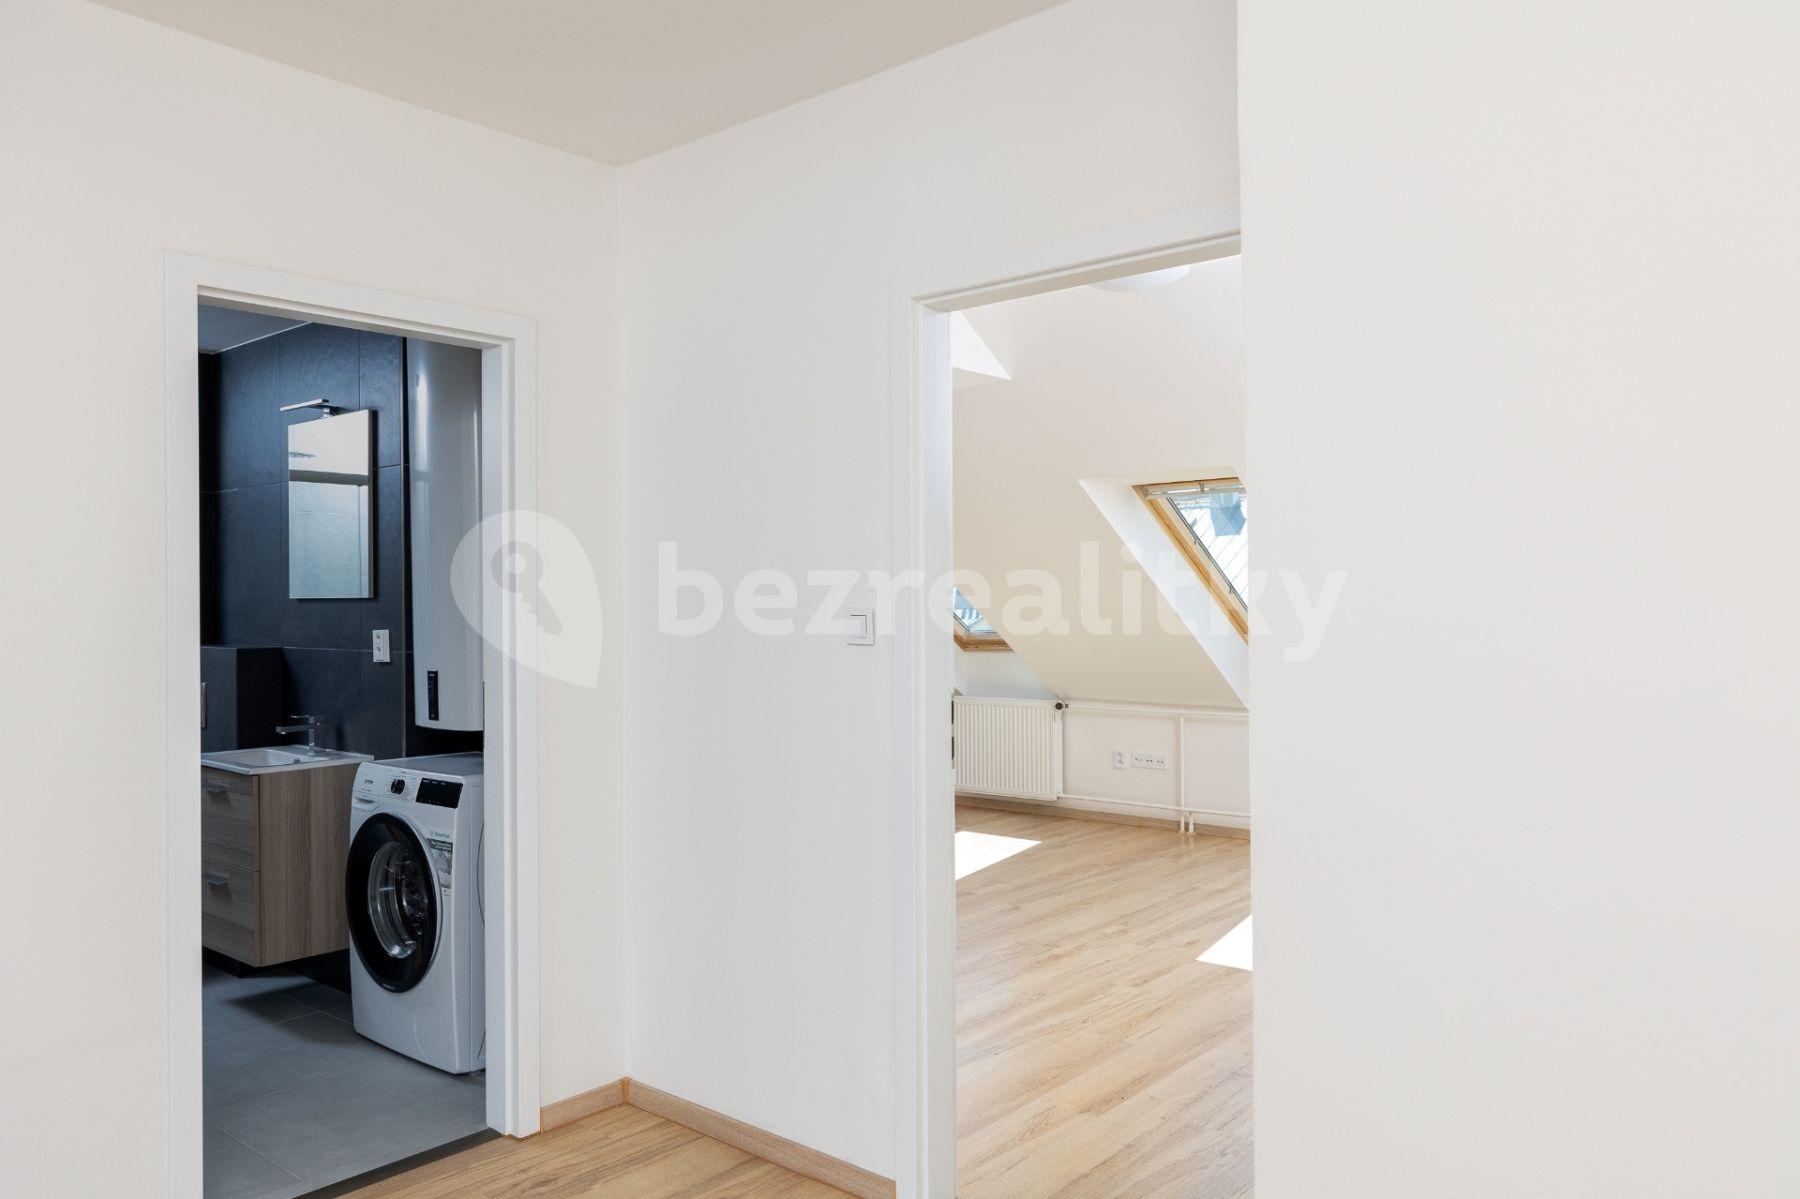 2 bedroom with open-plan kitchen flat to rent, 70 m², Františka Kadlece, Prague, Prague